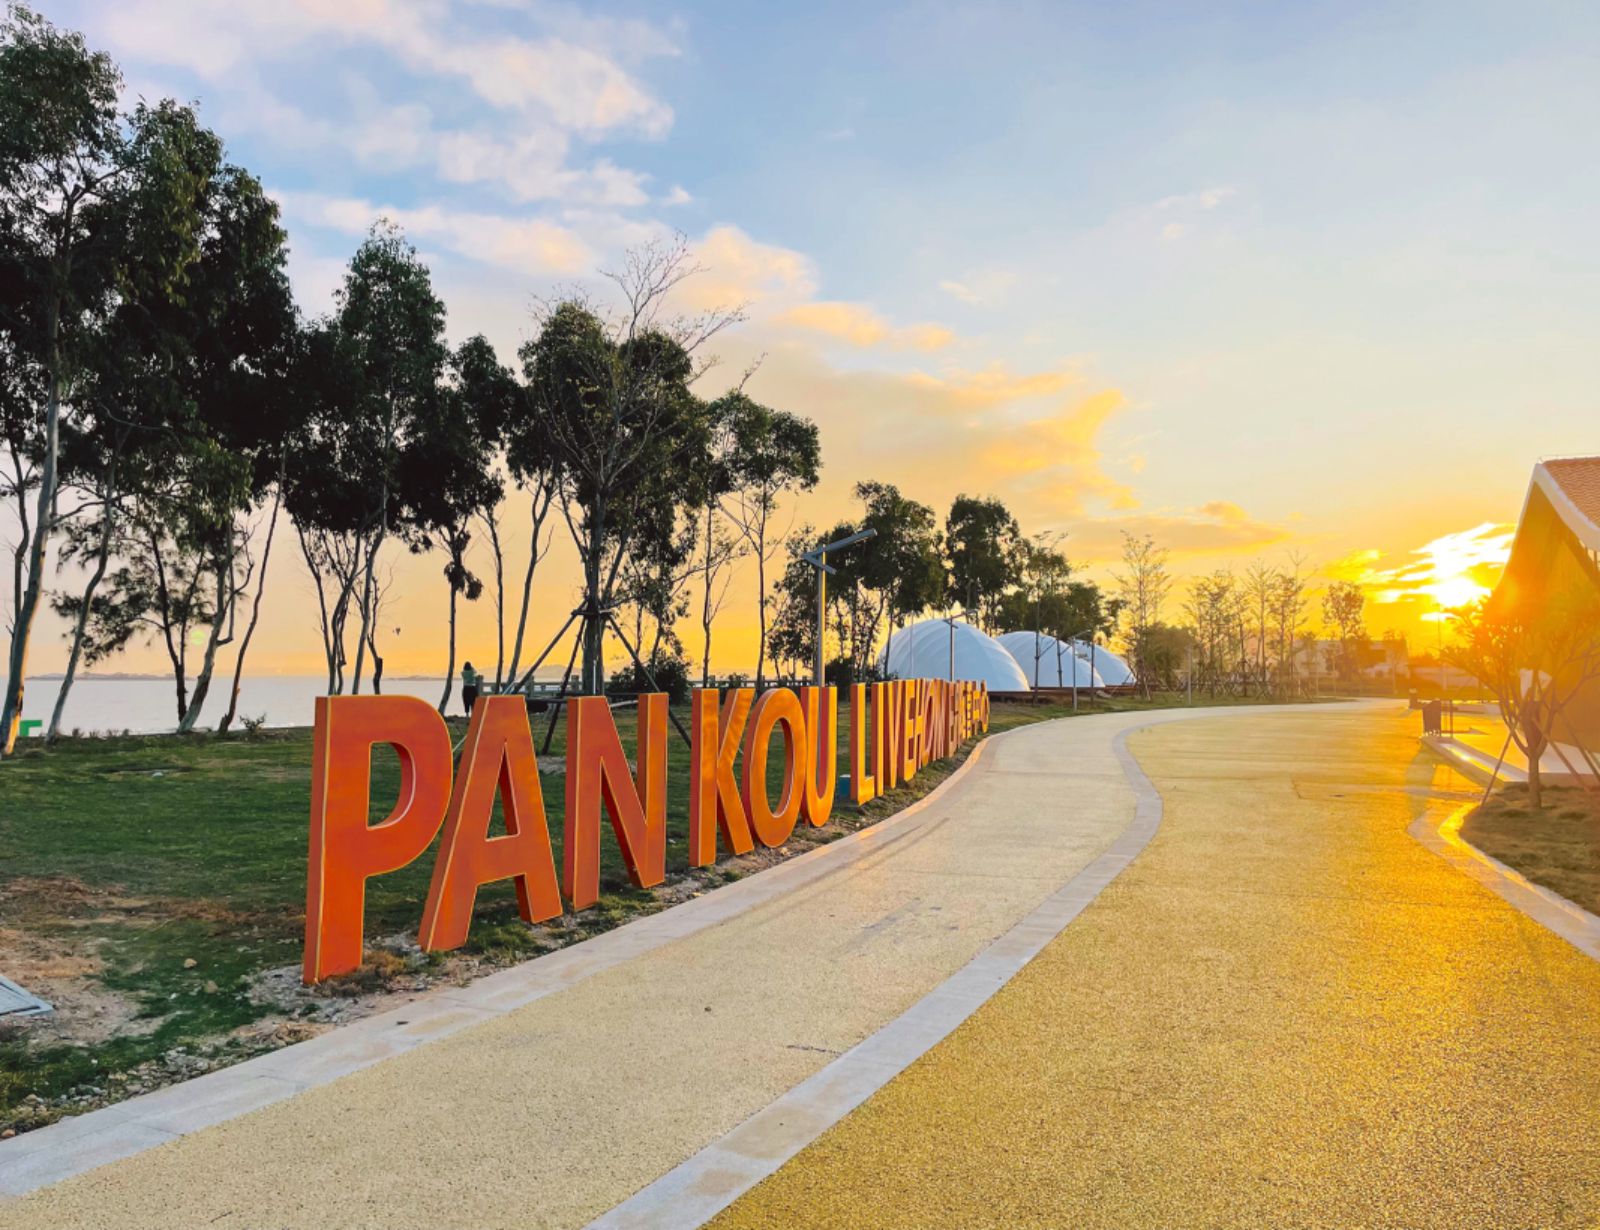 Pan Kou Live Home Three Bays Resort